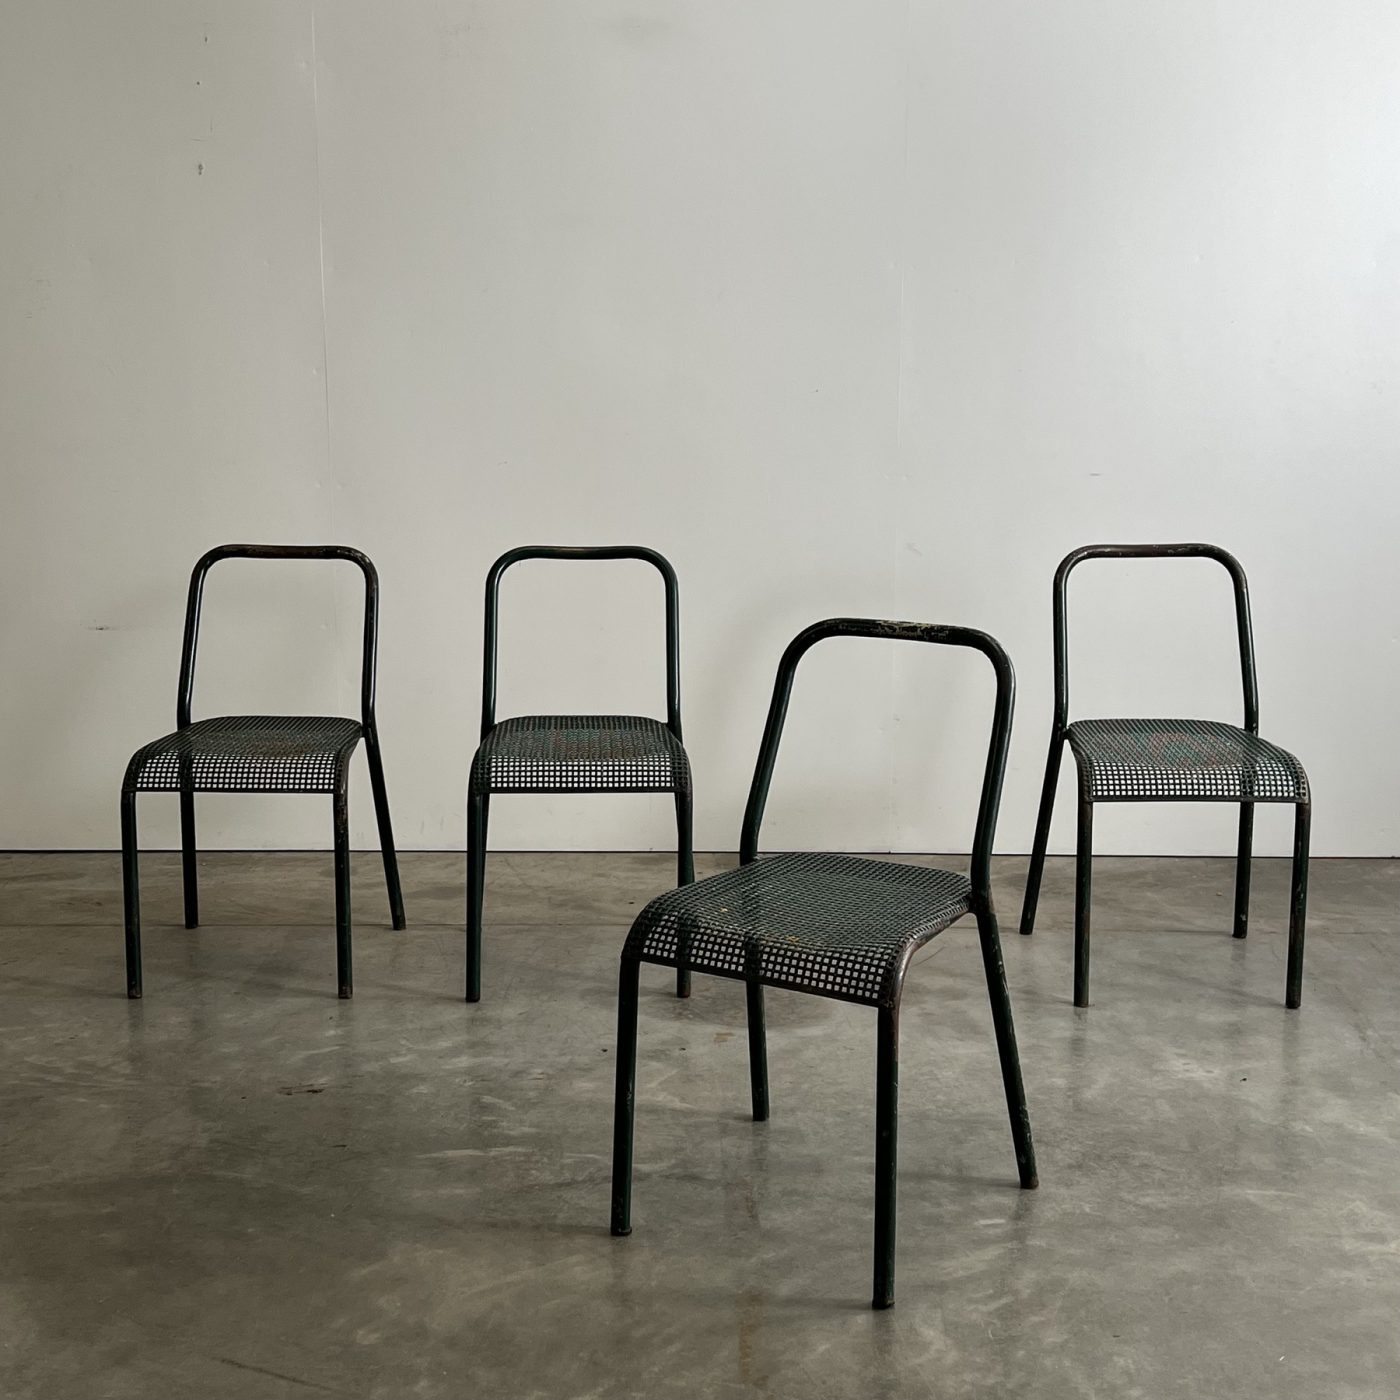 objet-vagabond-metal-chairs0004